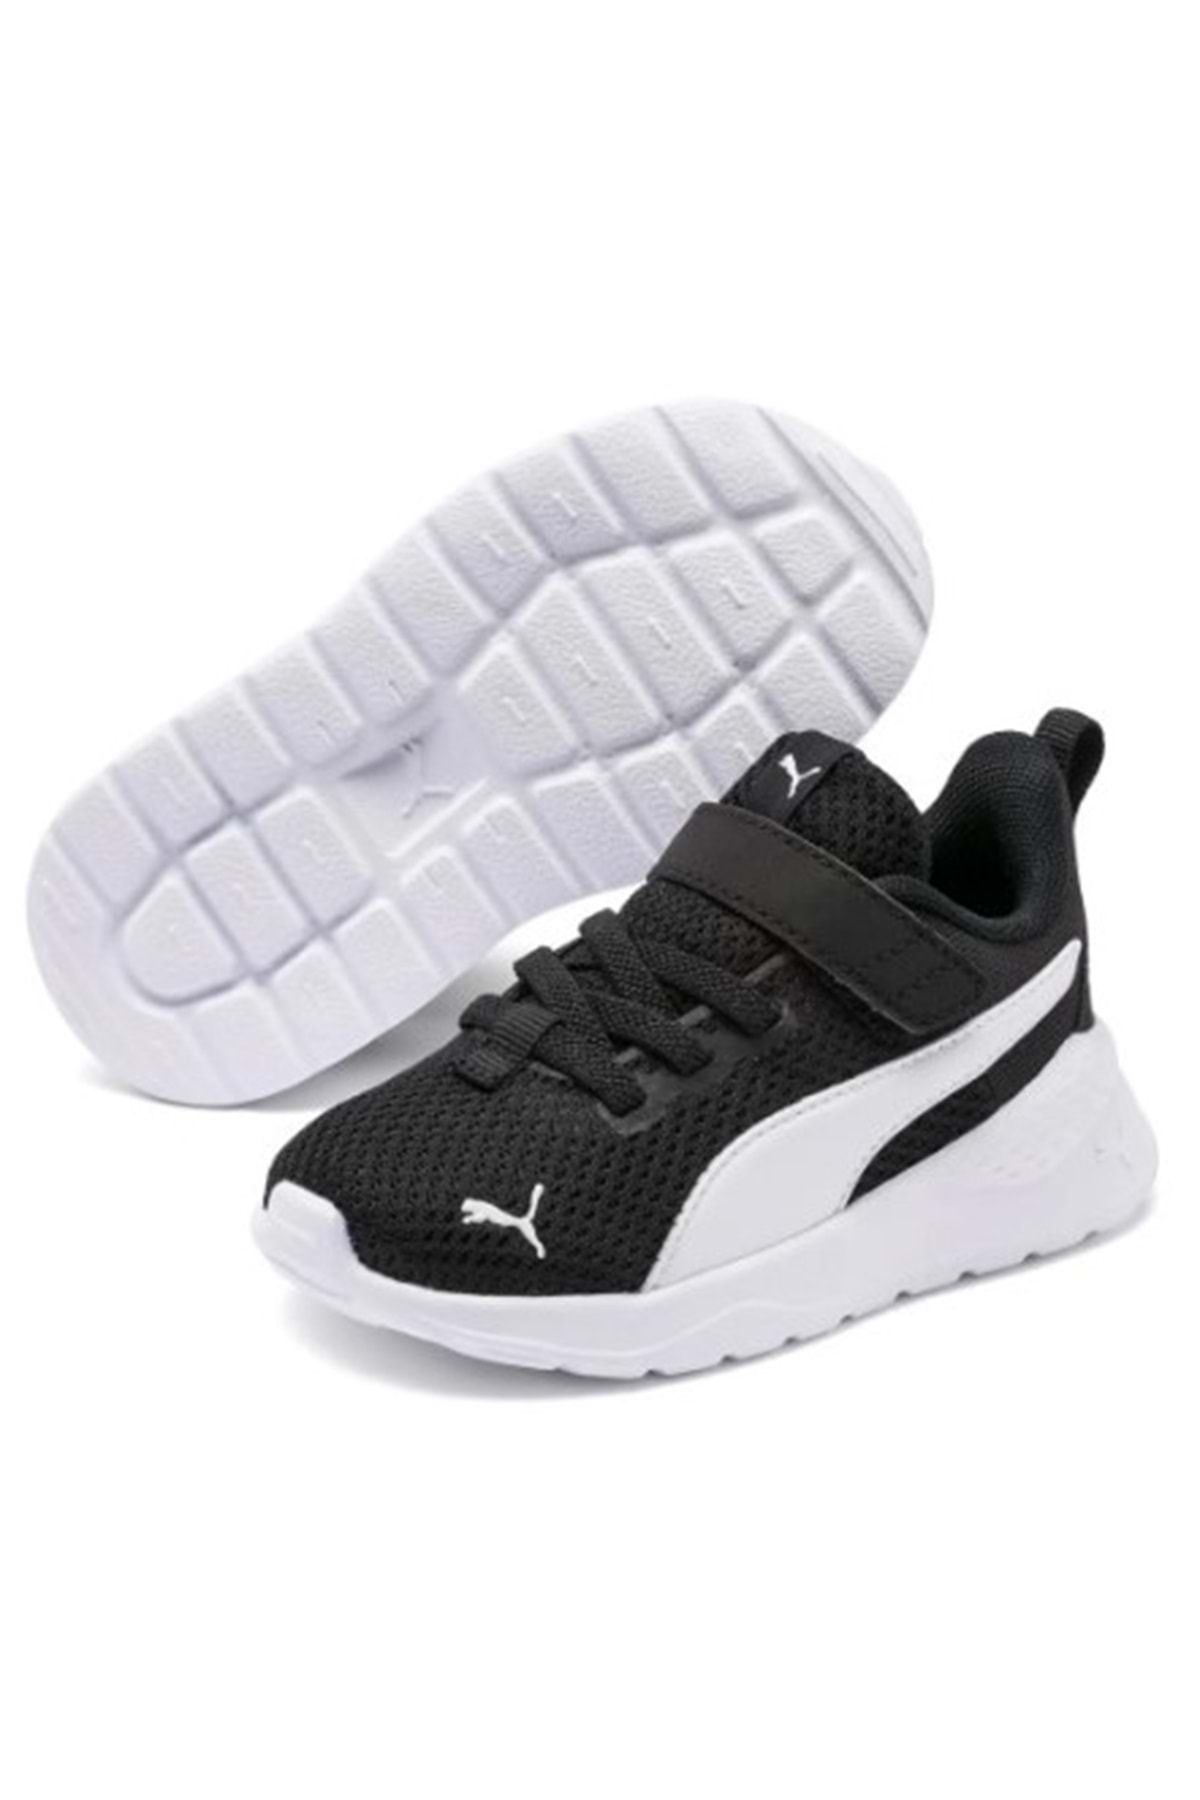 Puma Anzarun Lite Ac Inf 372010-01 Bebek Spor Ayakkabı Siyah-beyaz